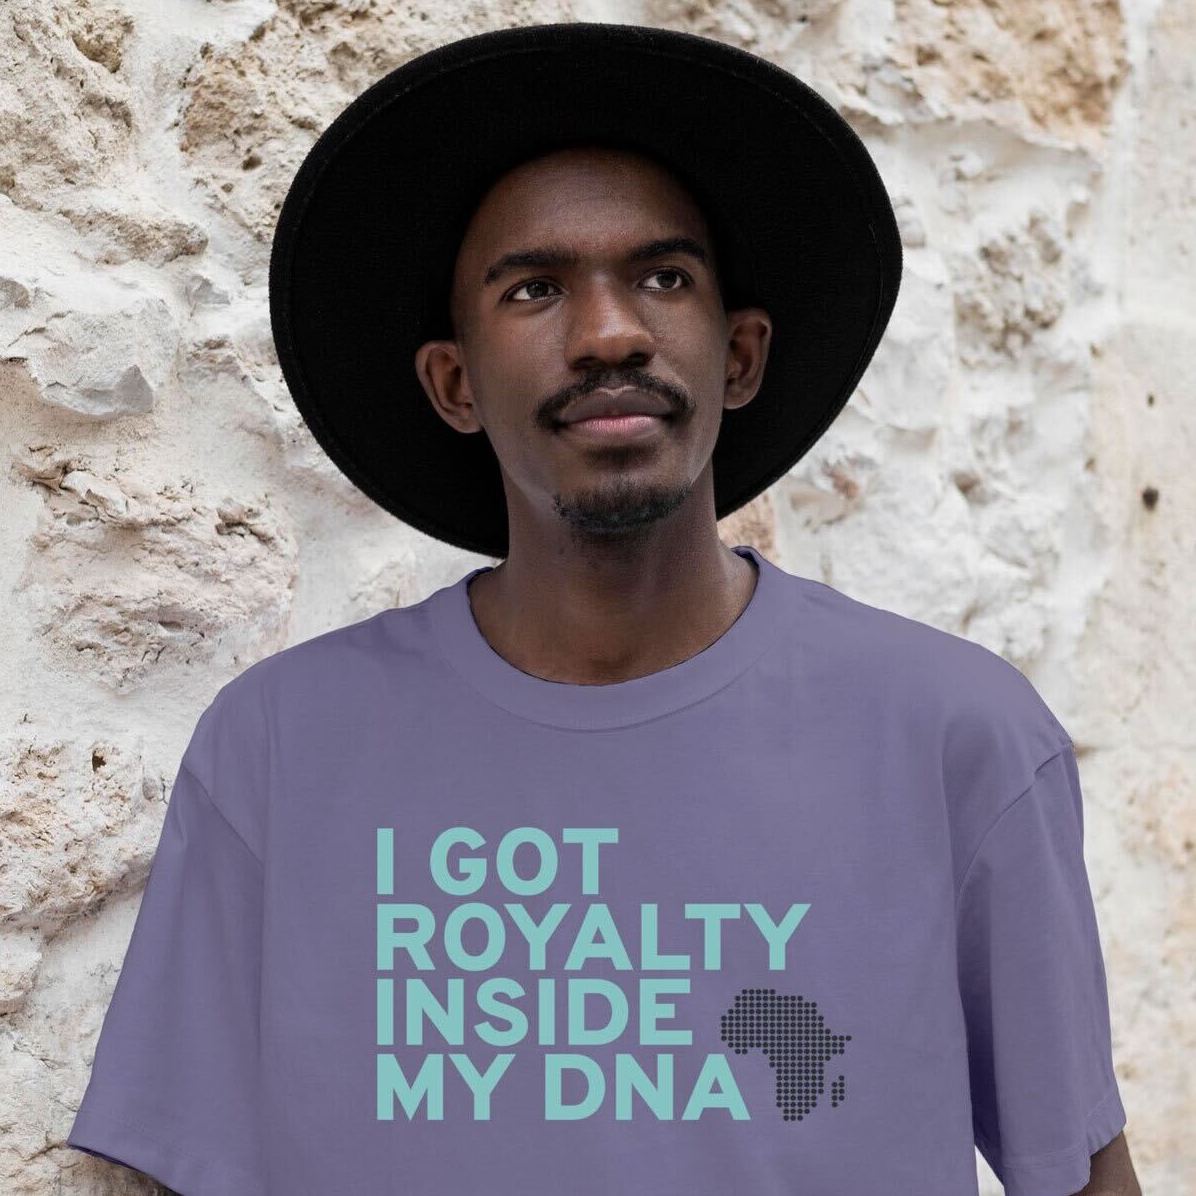 "I Got Royalty Inside My DNA" T-shirt